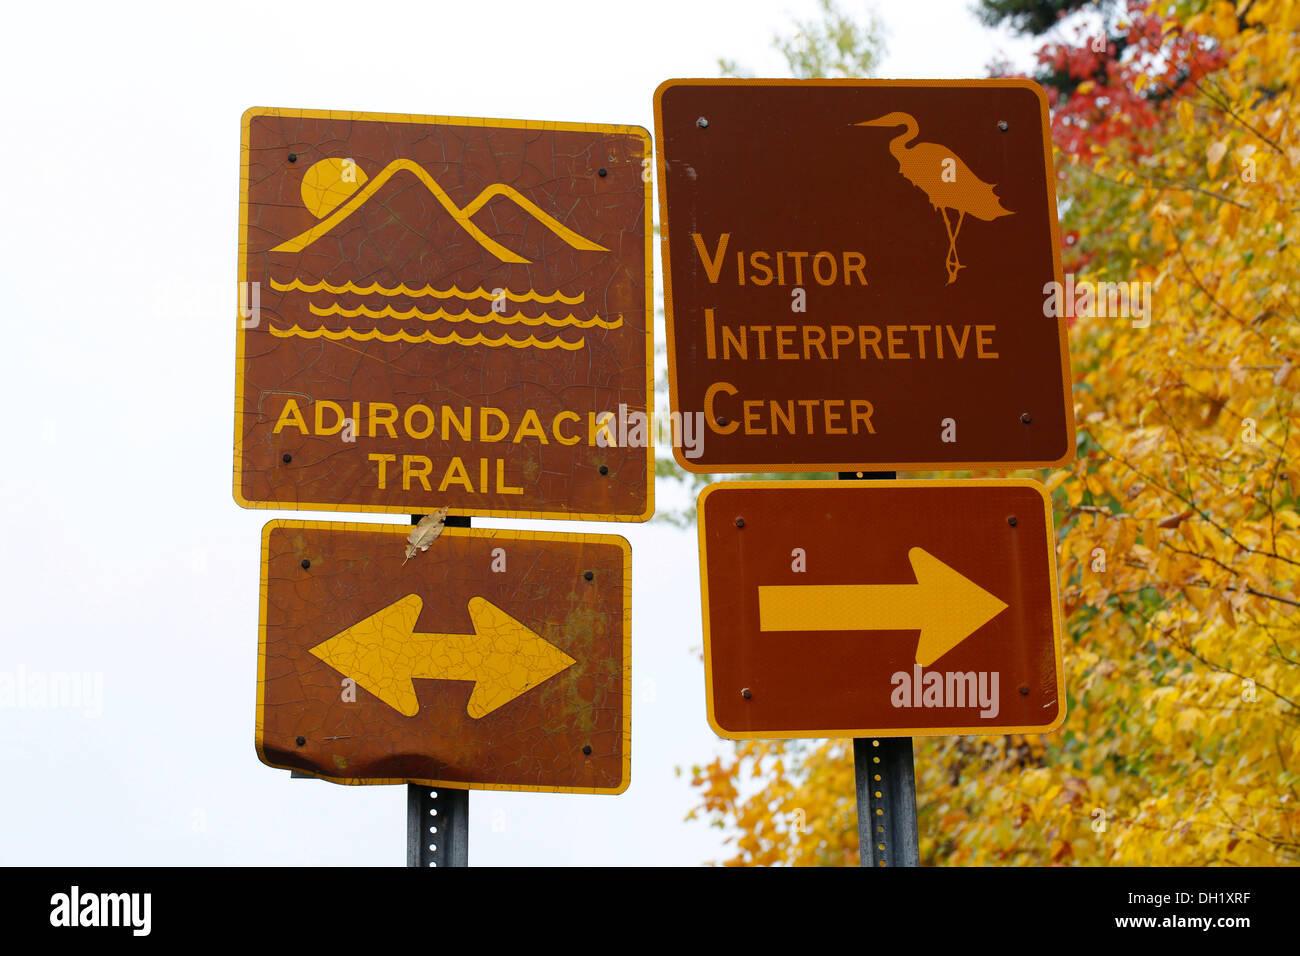 Adirondack Trail, sign in Upstate New York, USA Stock Photo